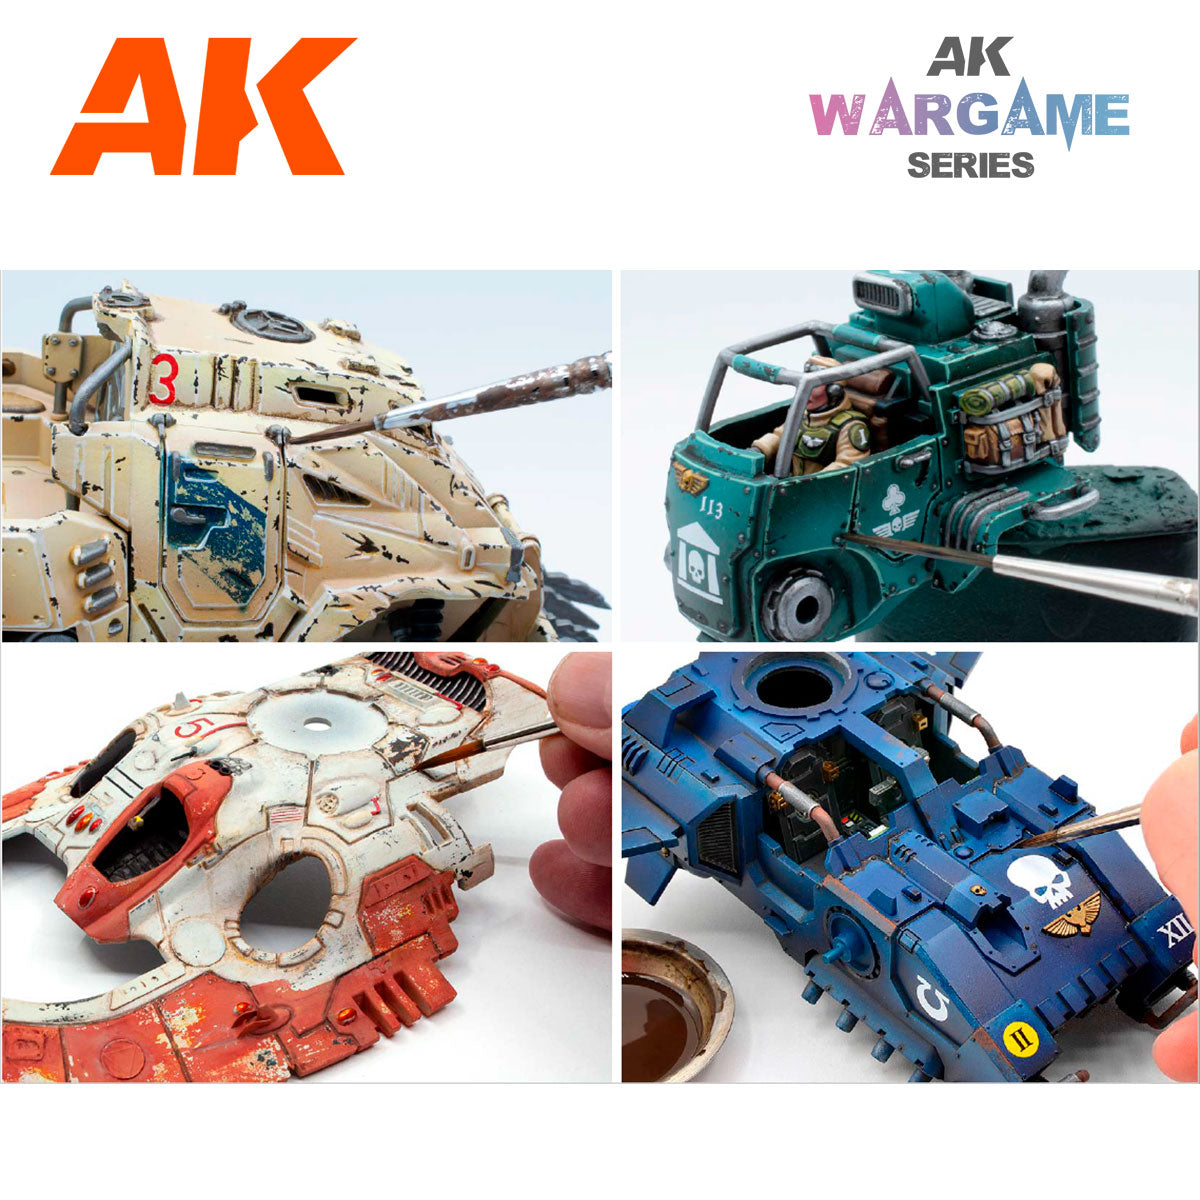 AK Interactive - Wargames Washes - Deep Blue Wash 35 mL